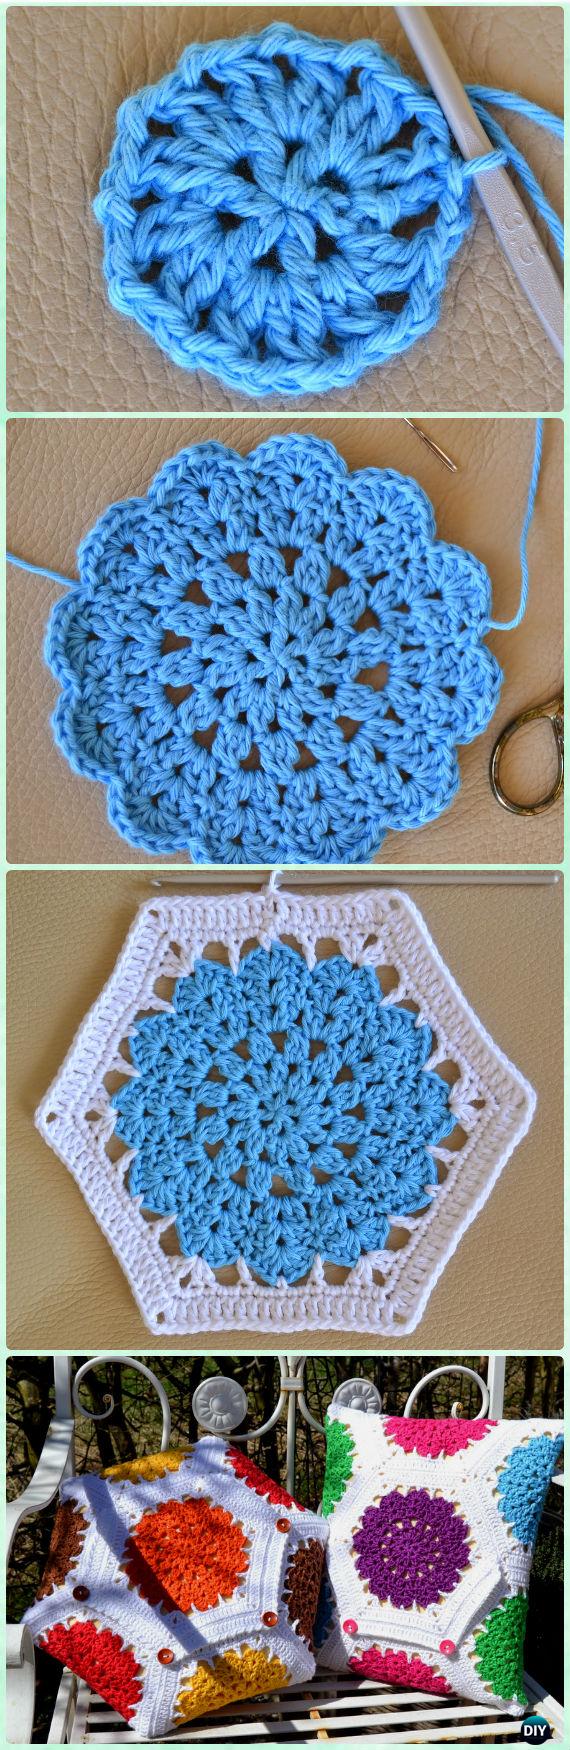 Crochet Mandala Flower Hexagon Motif Free Pattern - Crochet Hexagon Motif Free Patterns